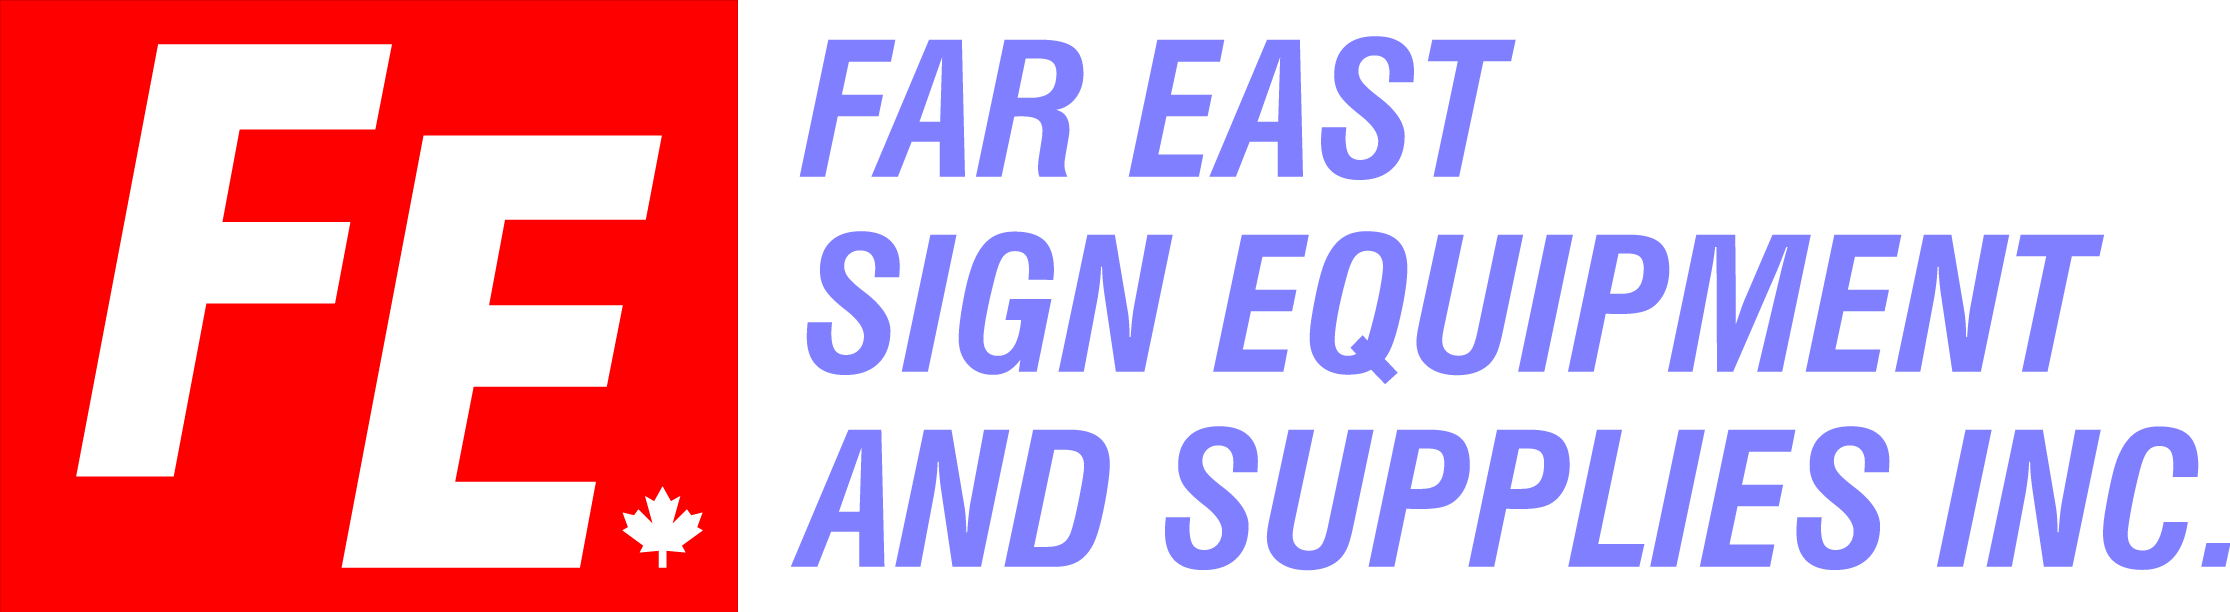 Far East Sign Equipment